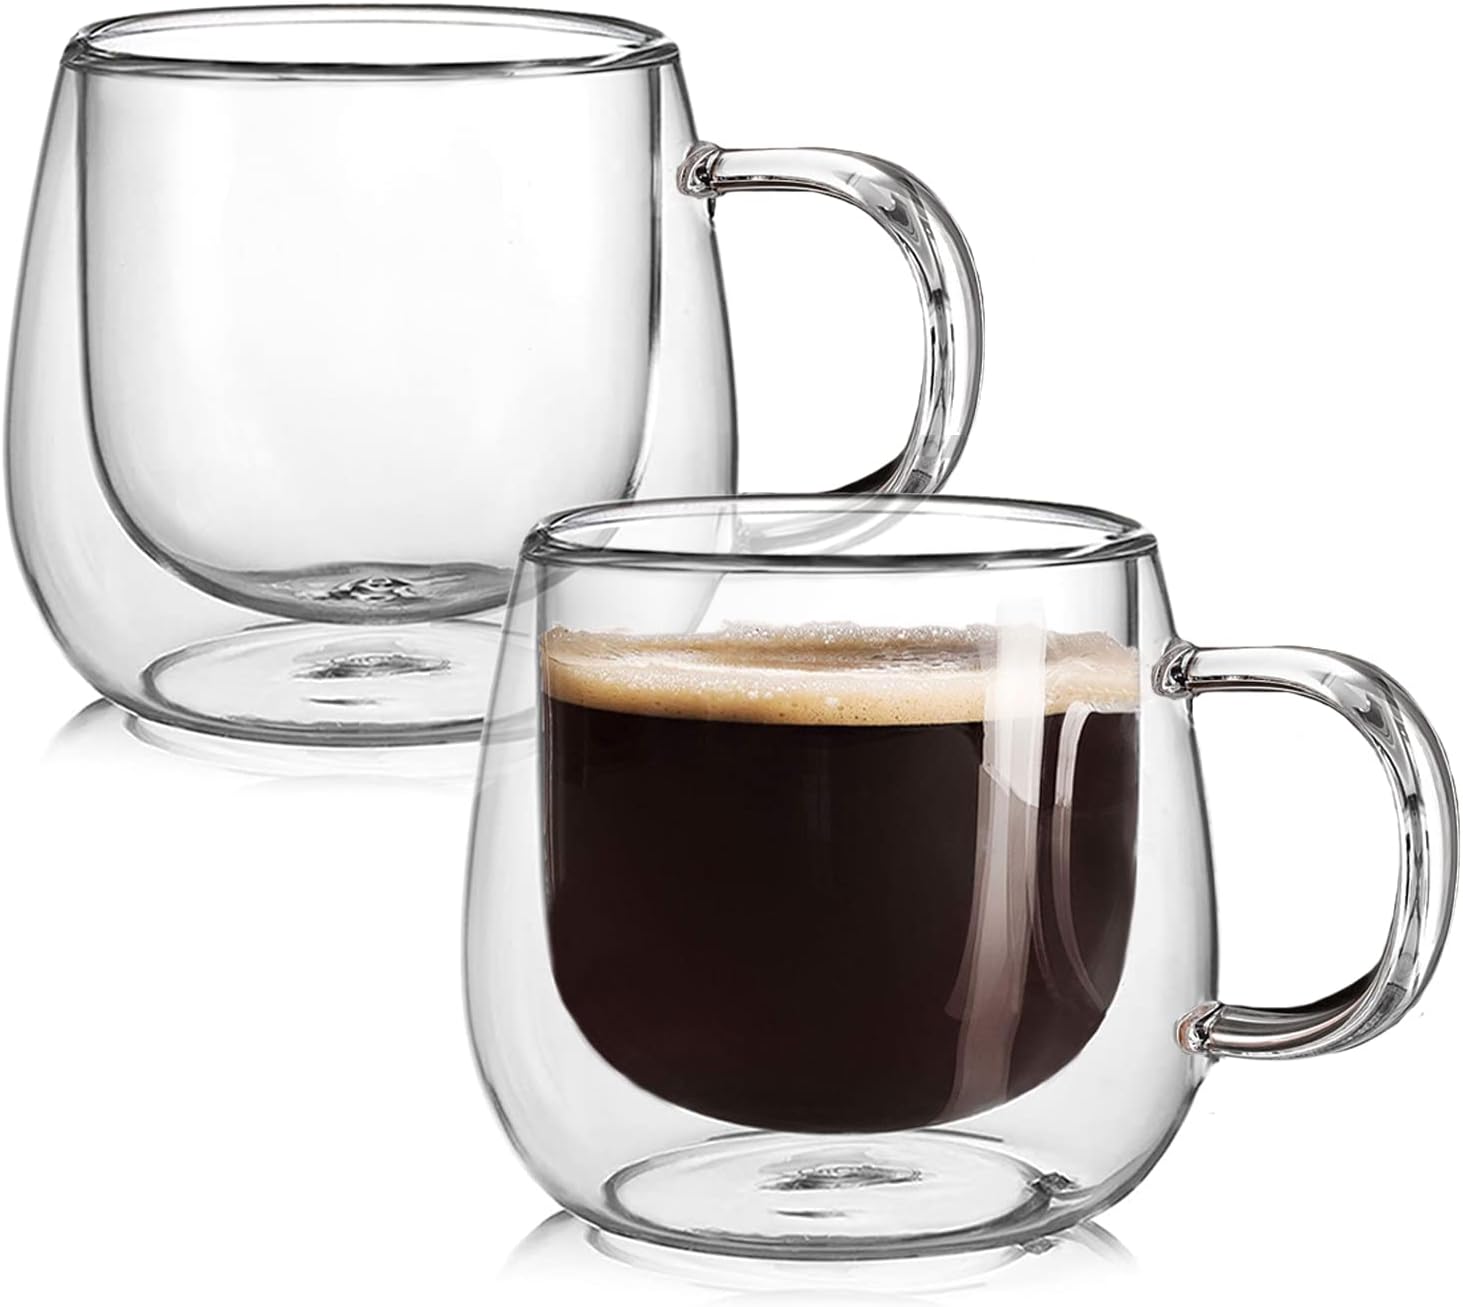  Aquach Double Wall Glass Coffee Mug 12 oz, Large Clear